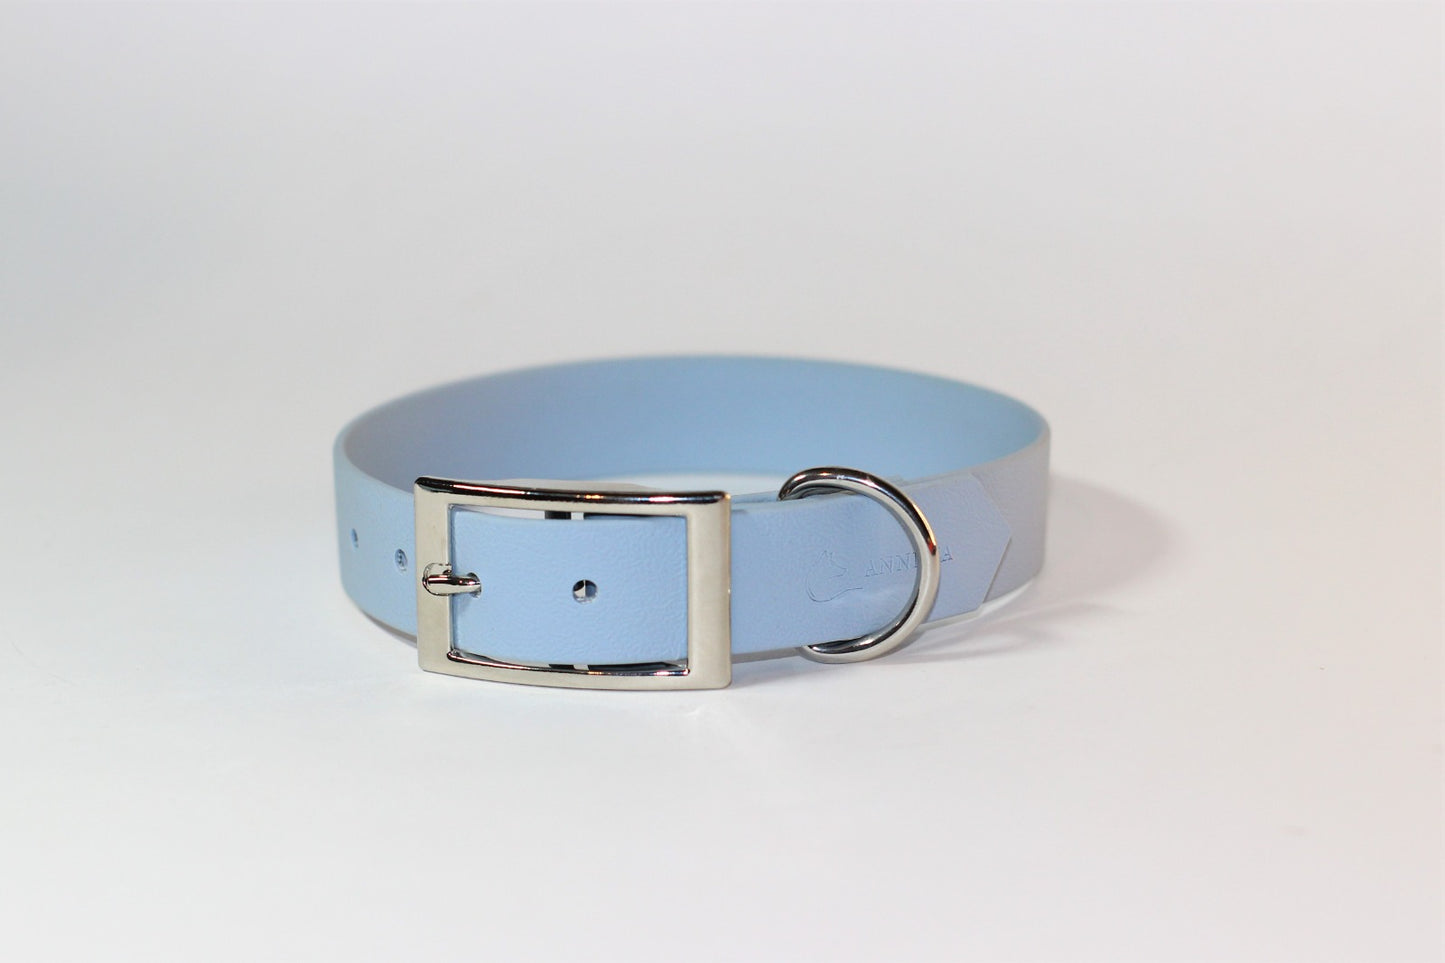 Biothane classic dog collar M (33-43cm) - Pastel Blue